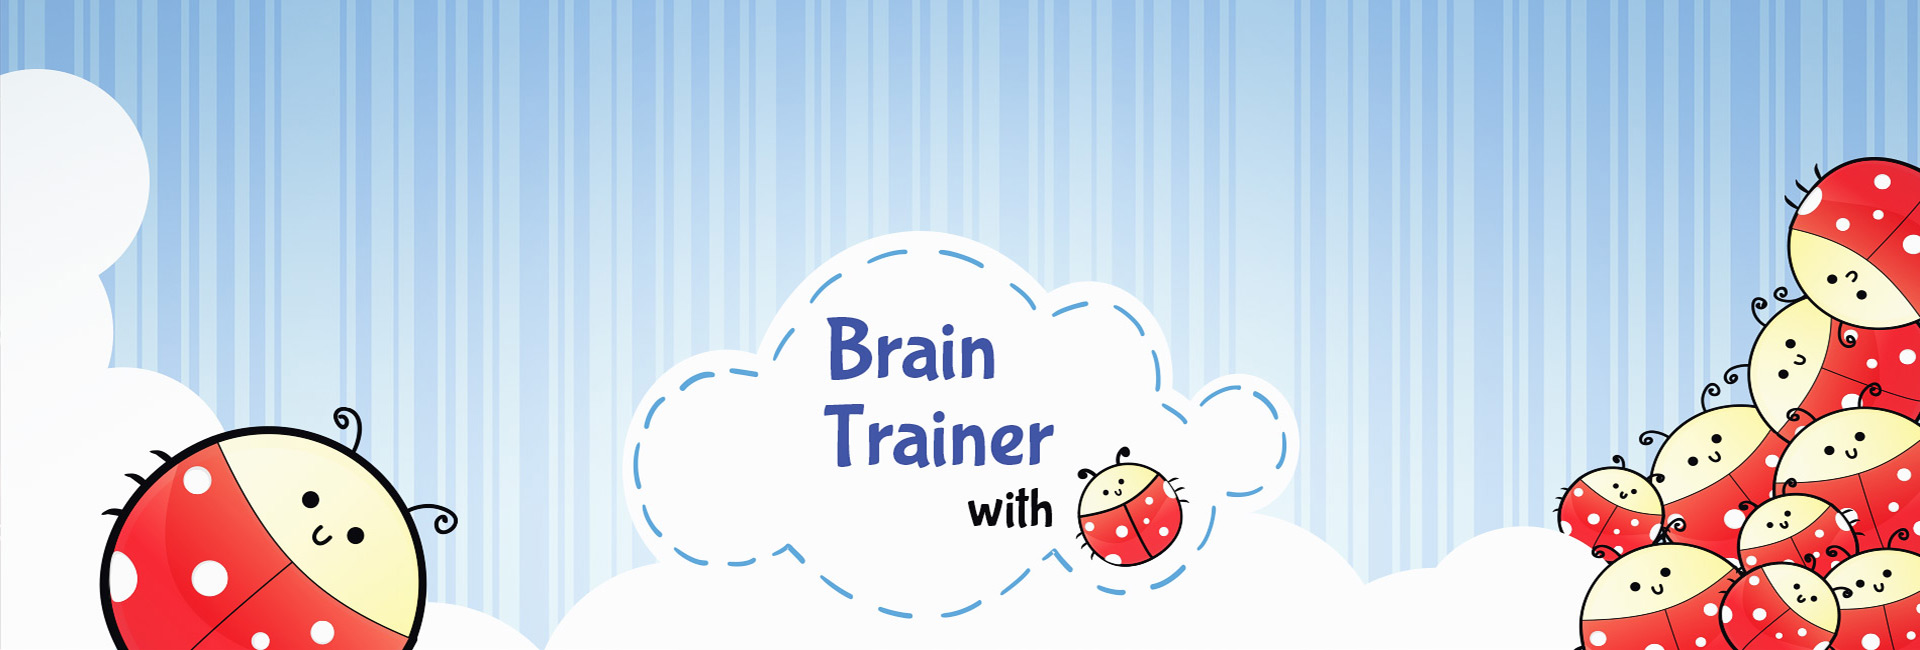 Brain Trainer with Ladybug